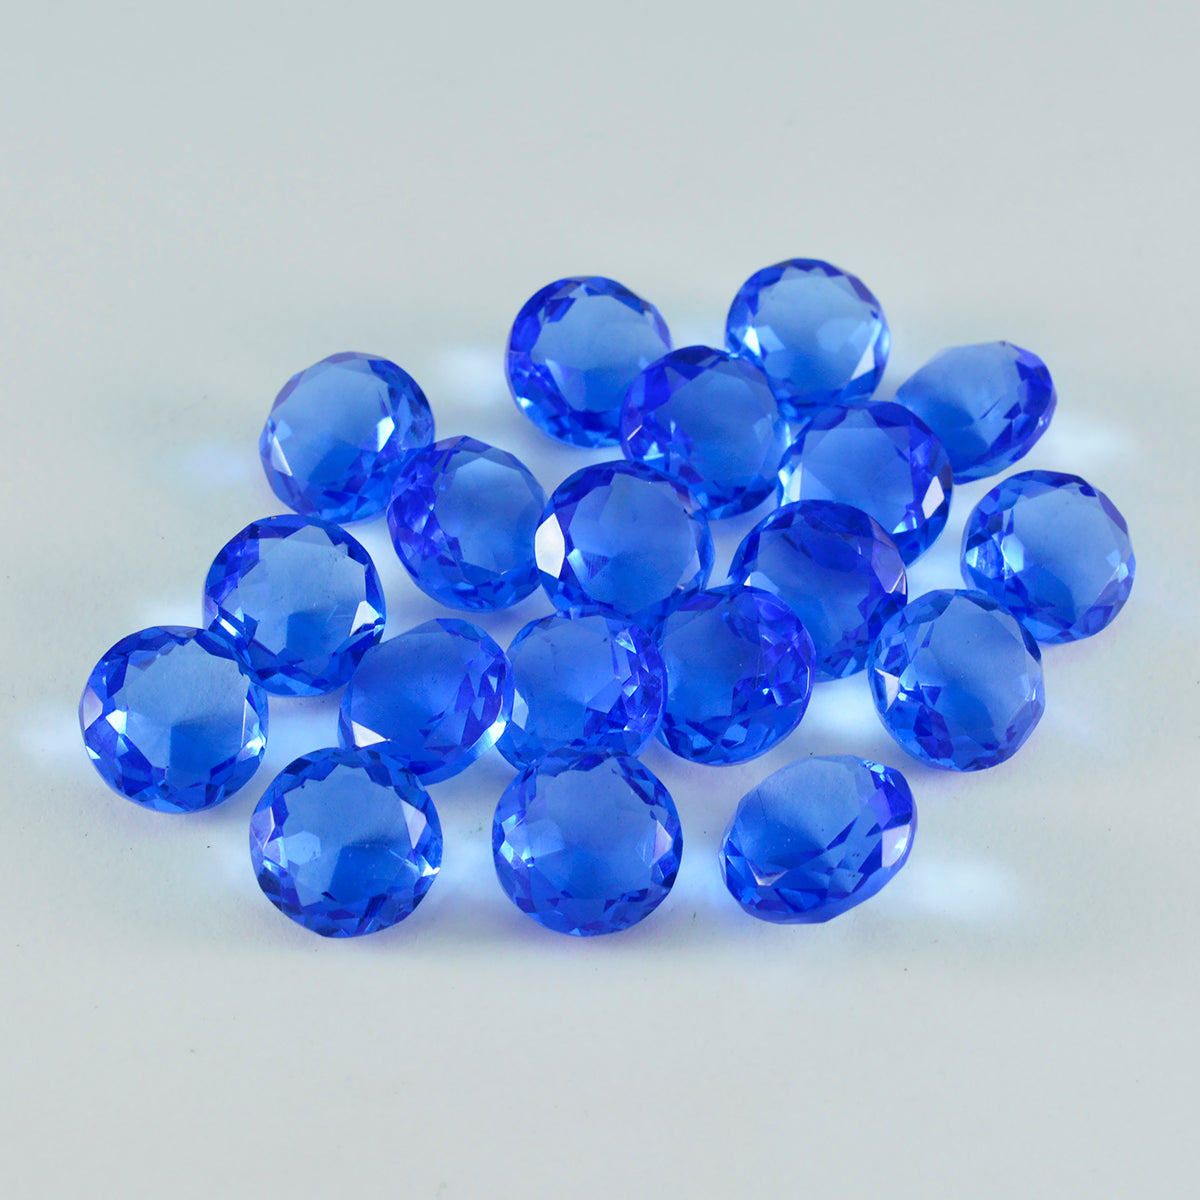 Riyogems 1PC Blue Sapphire CZ Faceted 6x6 mm Round Shape sweet Quality Gemstone